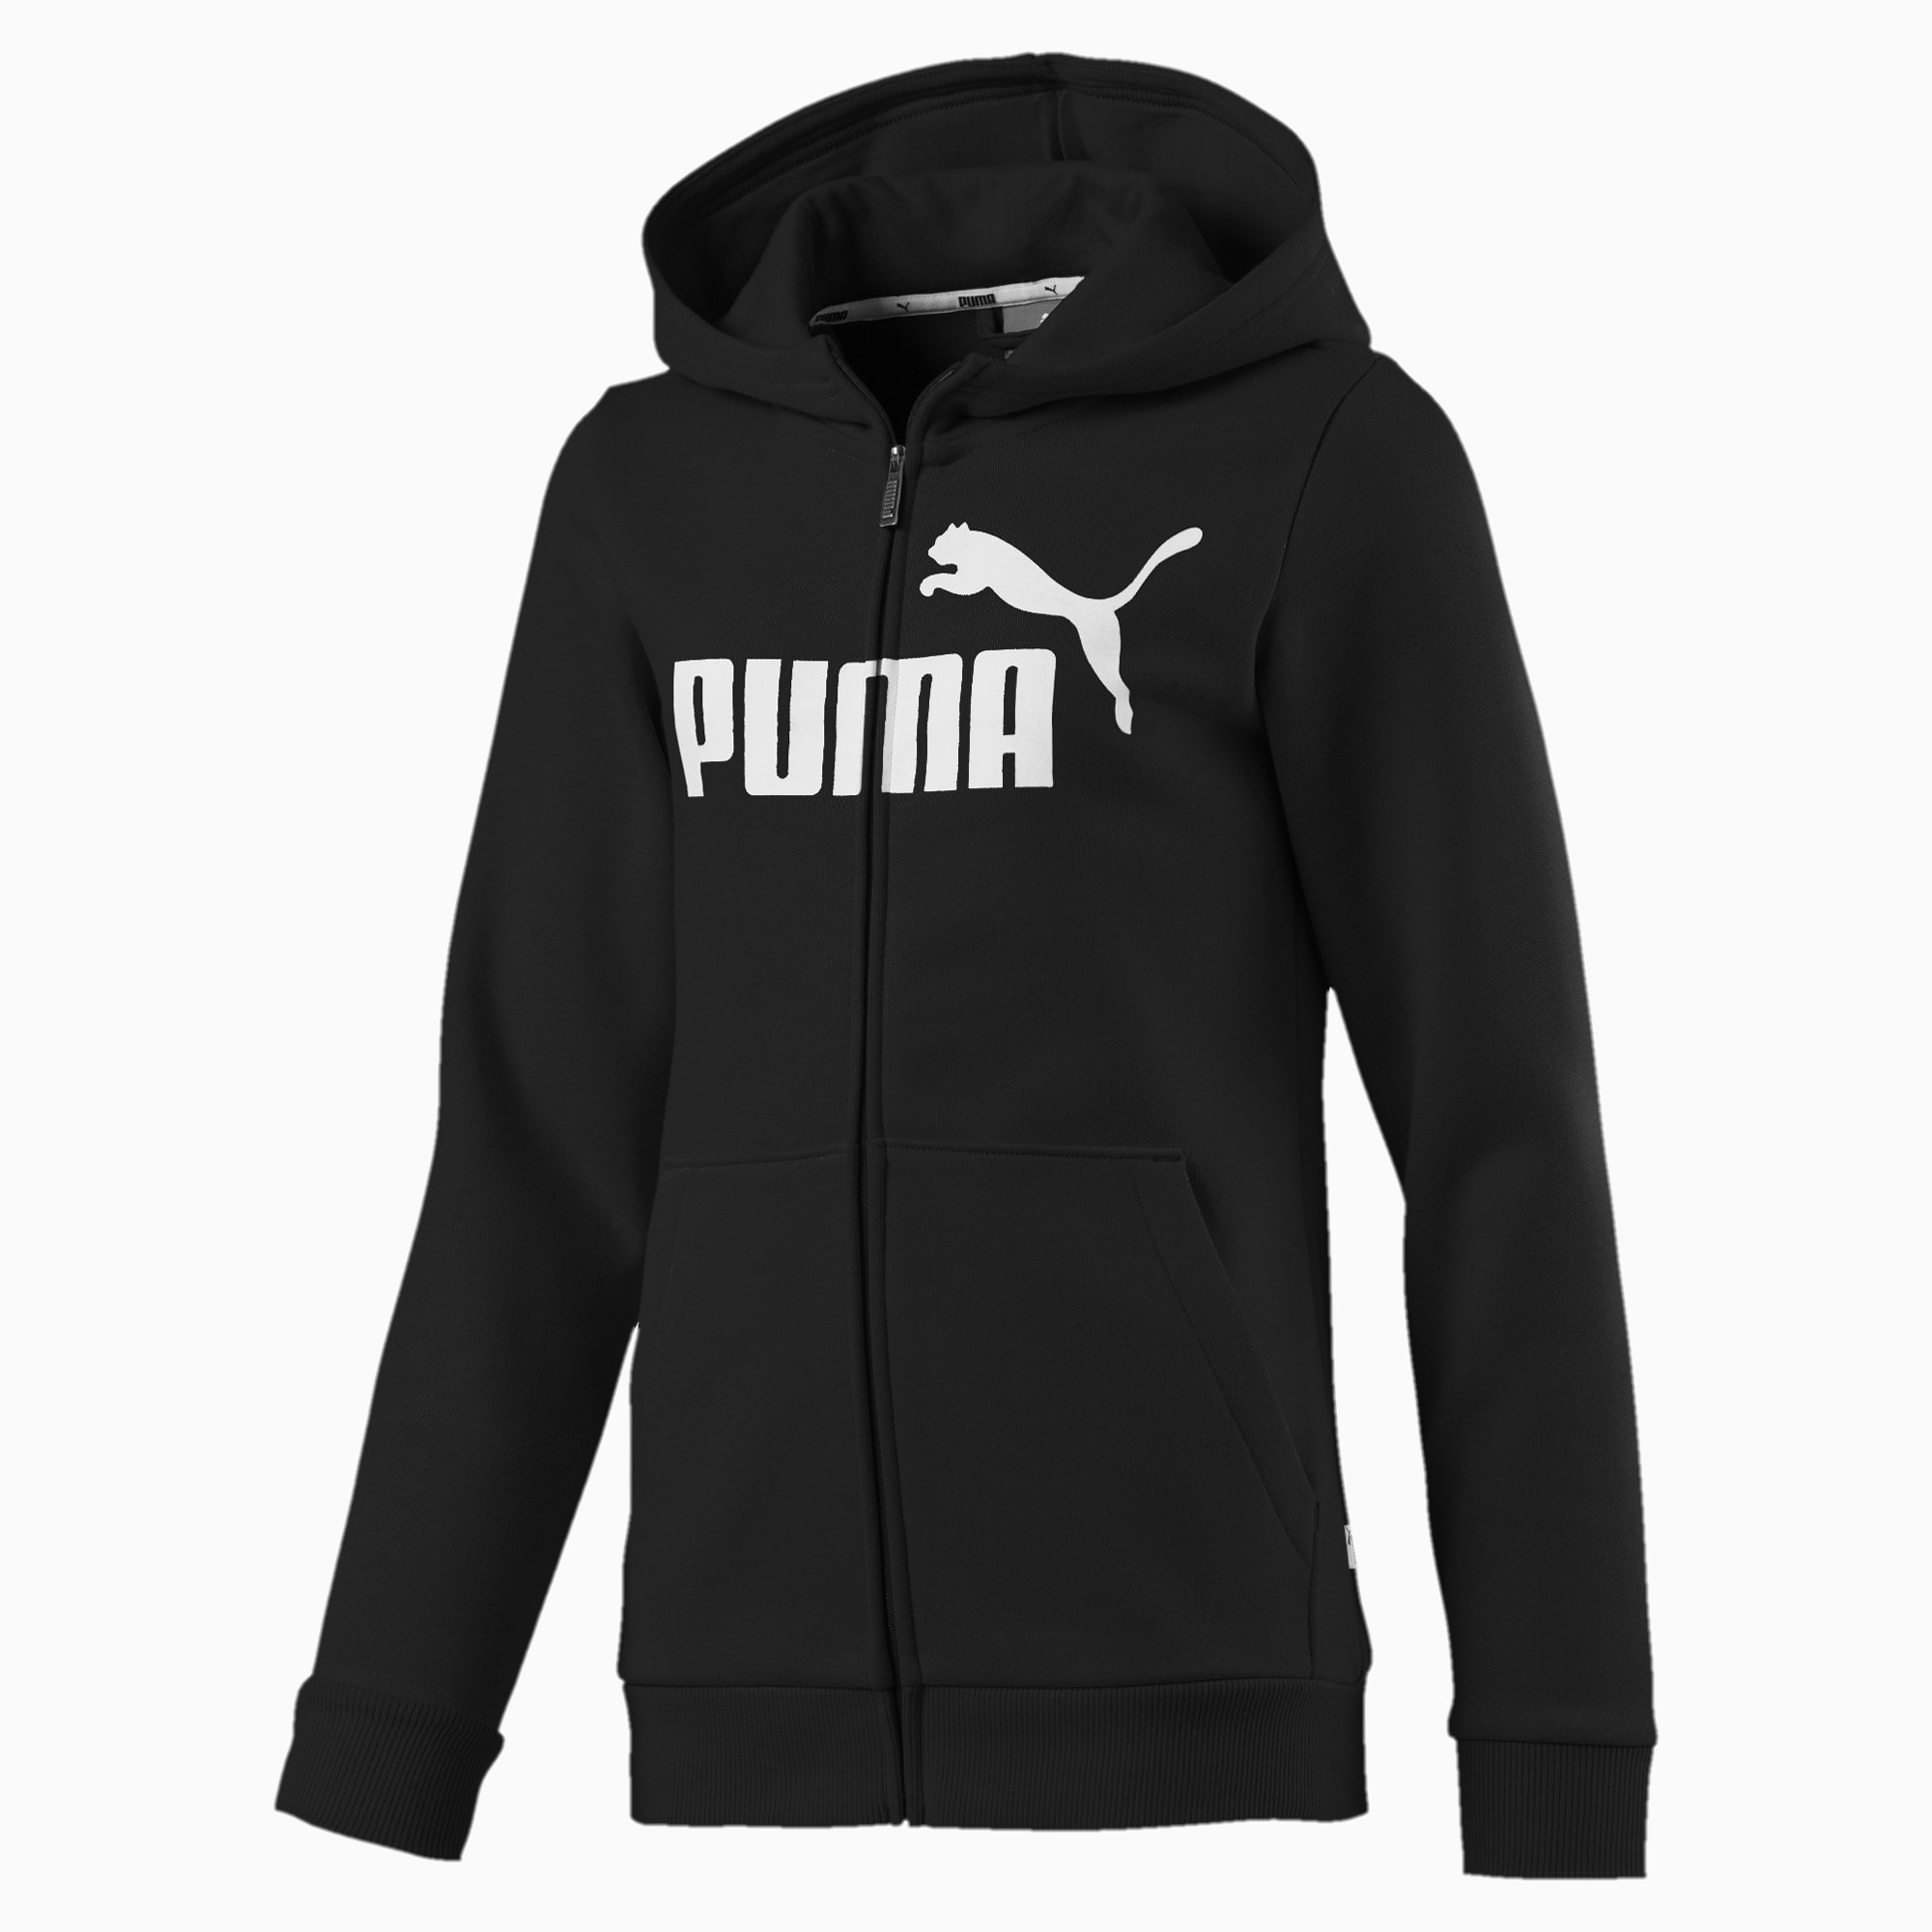 puma jackets for girls